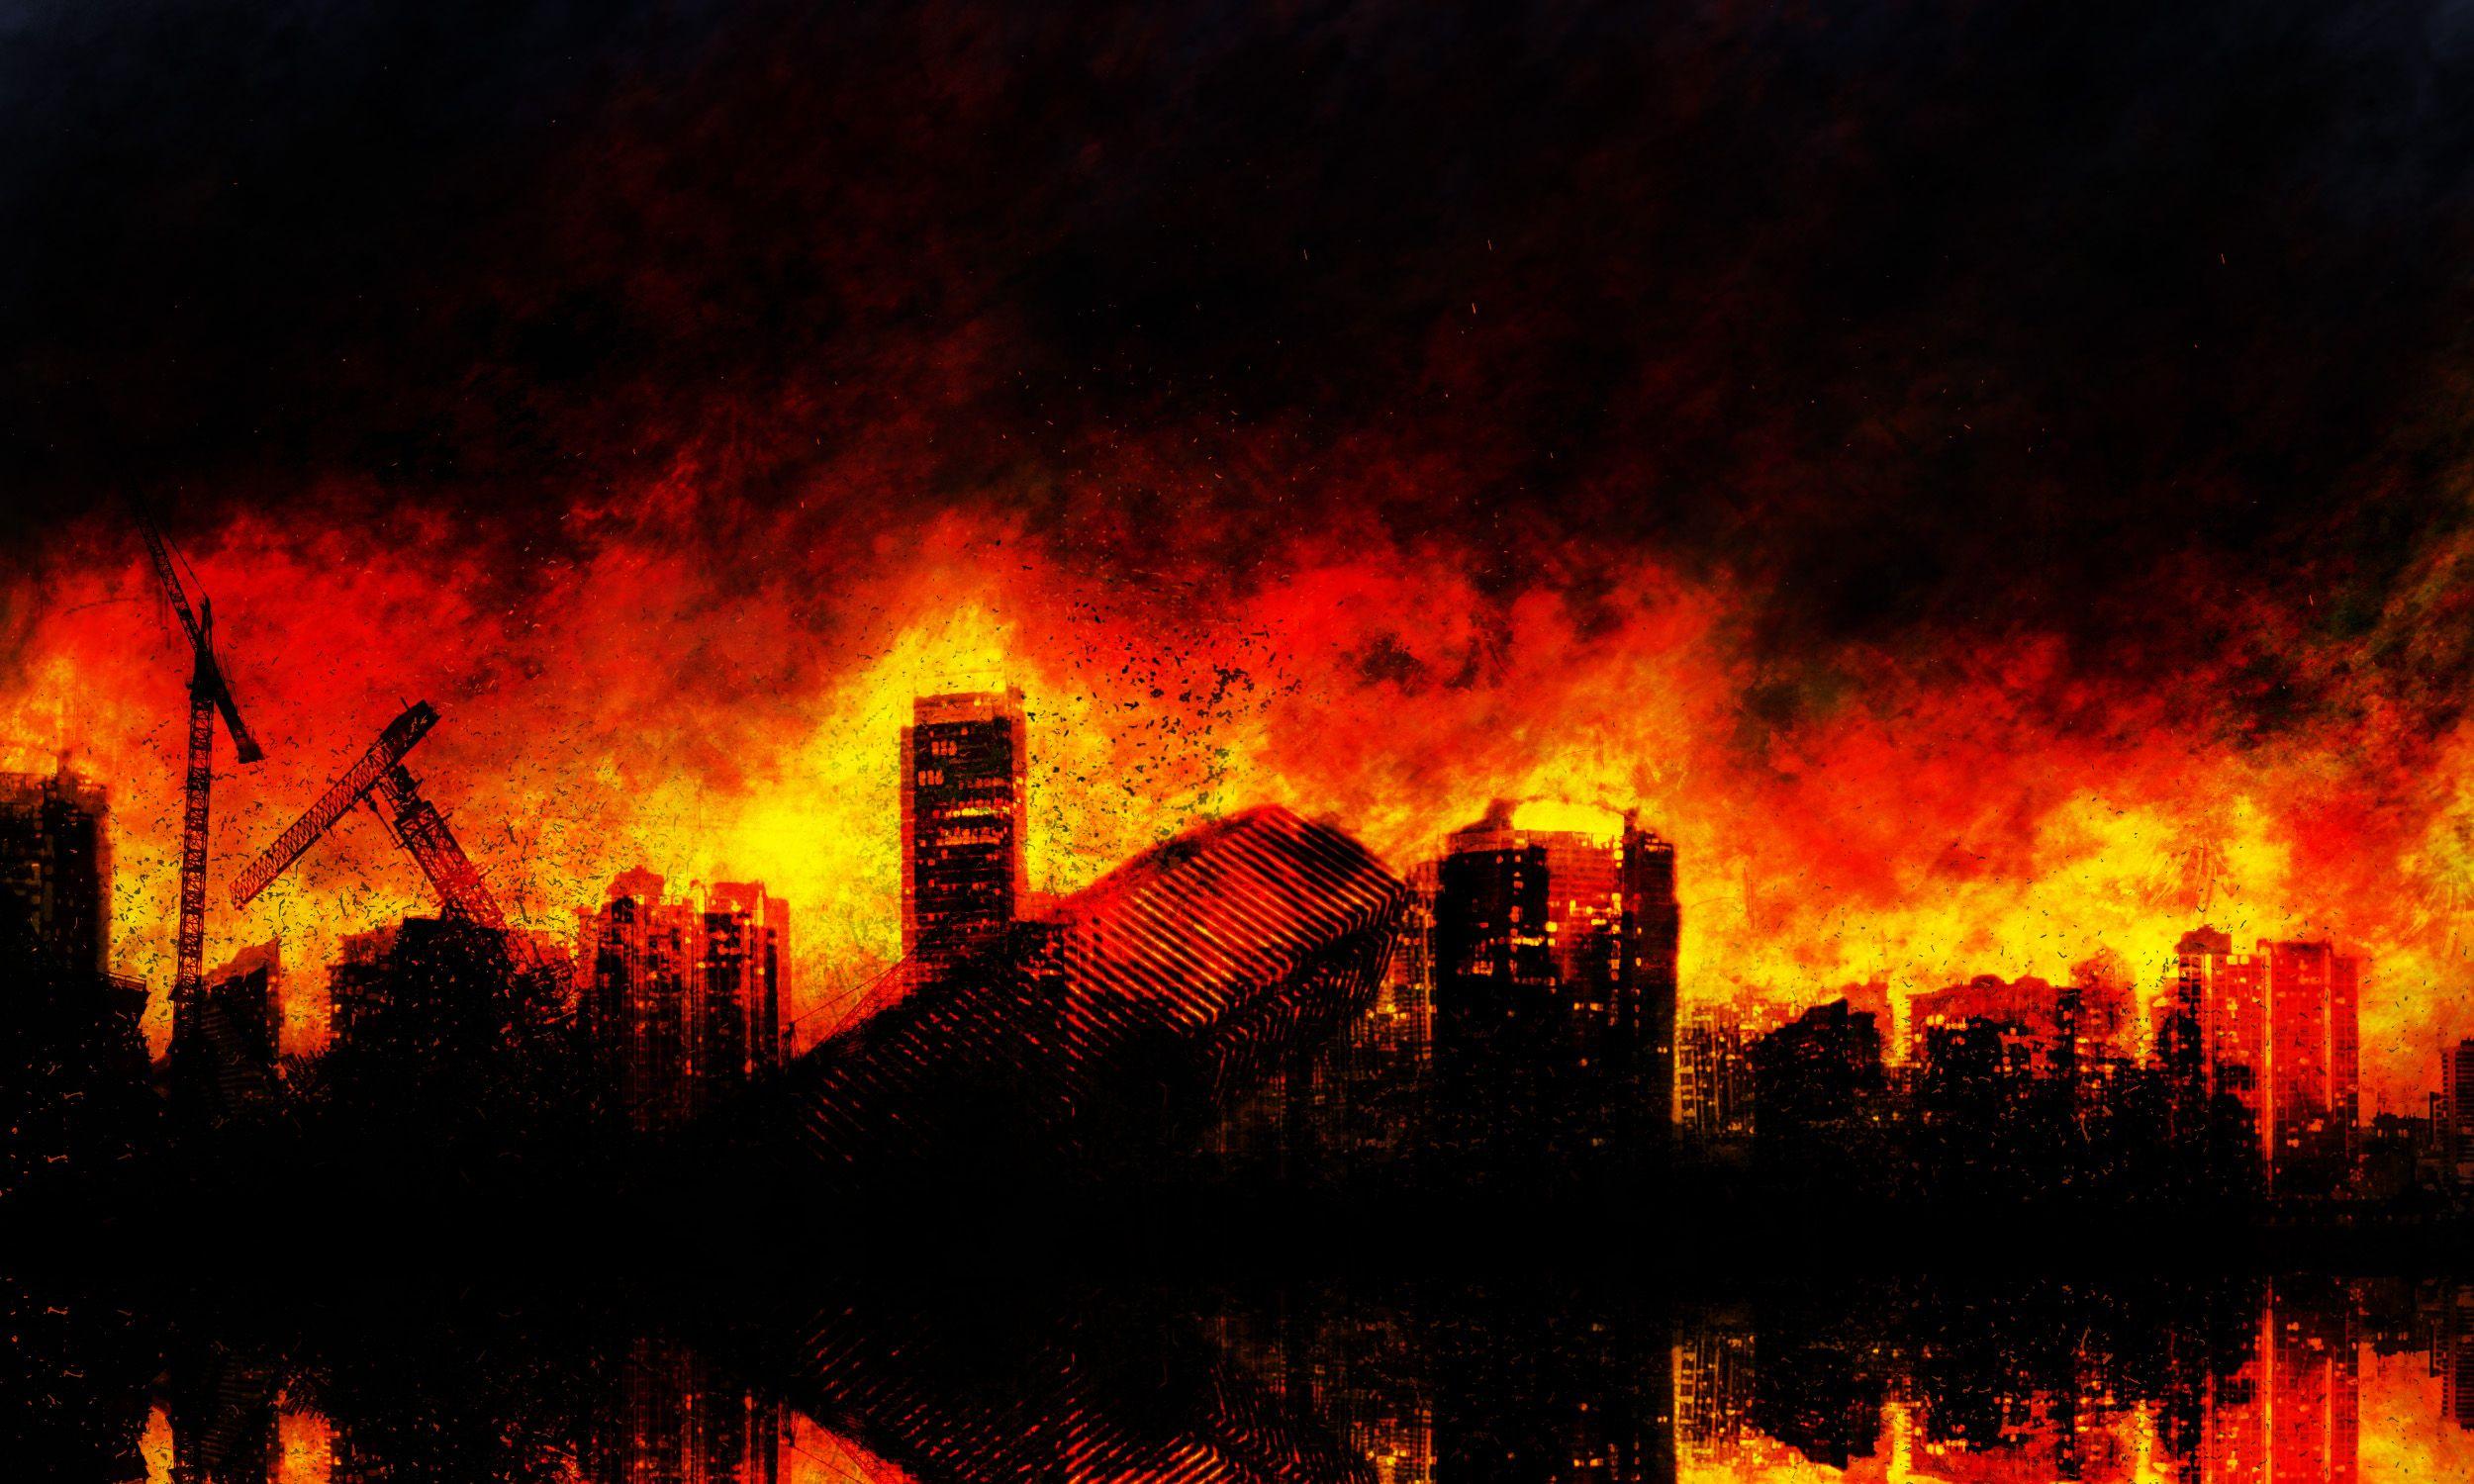 Burning City by Stellarian on Newgrounds